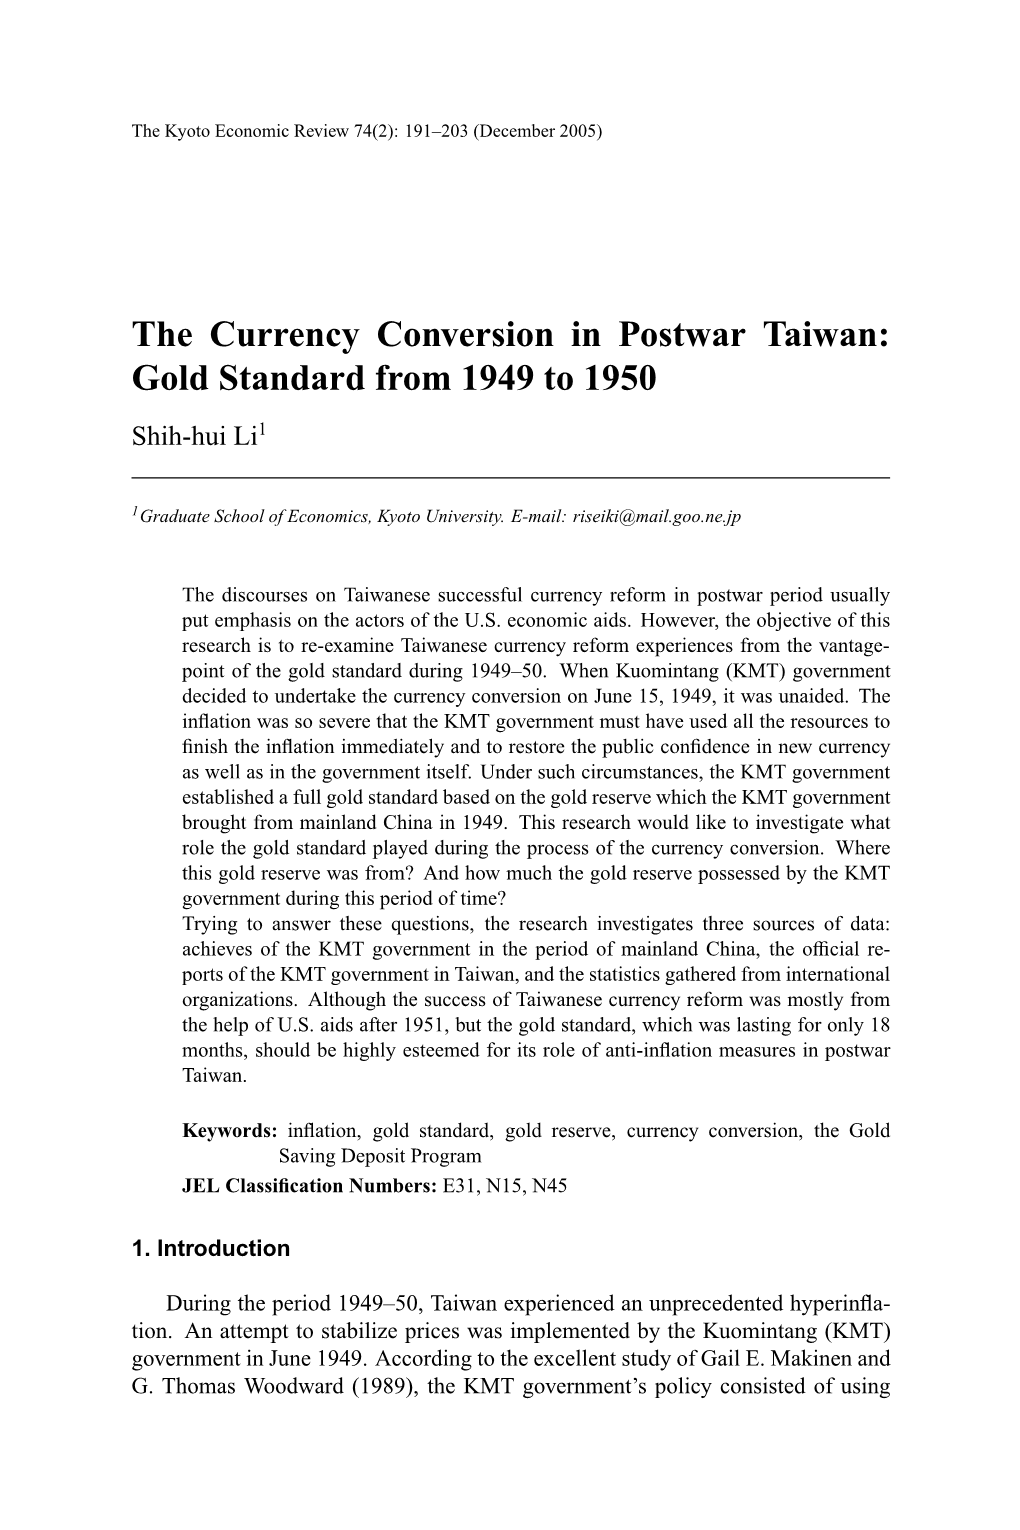 The Currency Conversion in Postwar Taiwan: Gold Standard from 1949 to 1950 Shih-Hui Li1